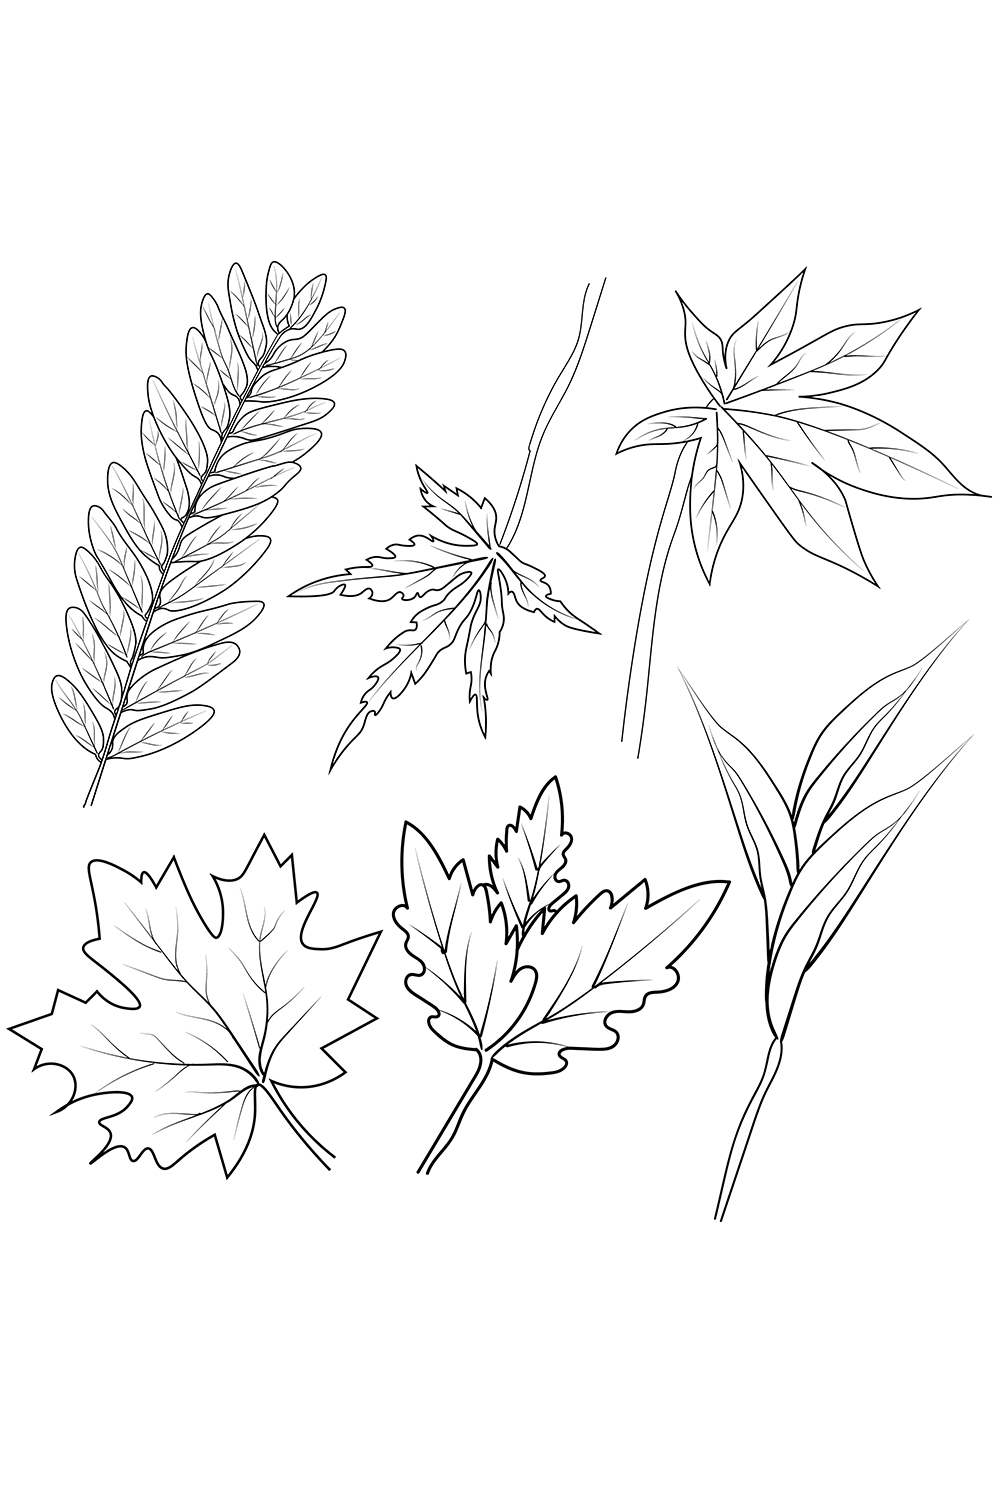 Set of hand-drawn black and white autumn falling leaves - rowan, oak, chestnut, maple, ginkgo, aspen, sketch art style vector pinterest preview image.